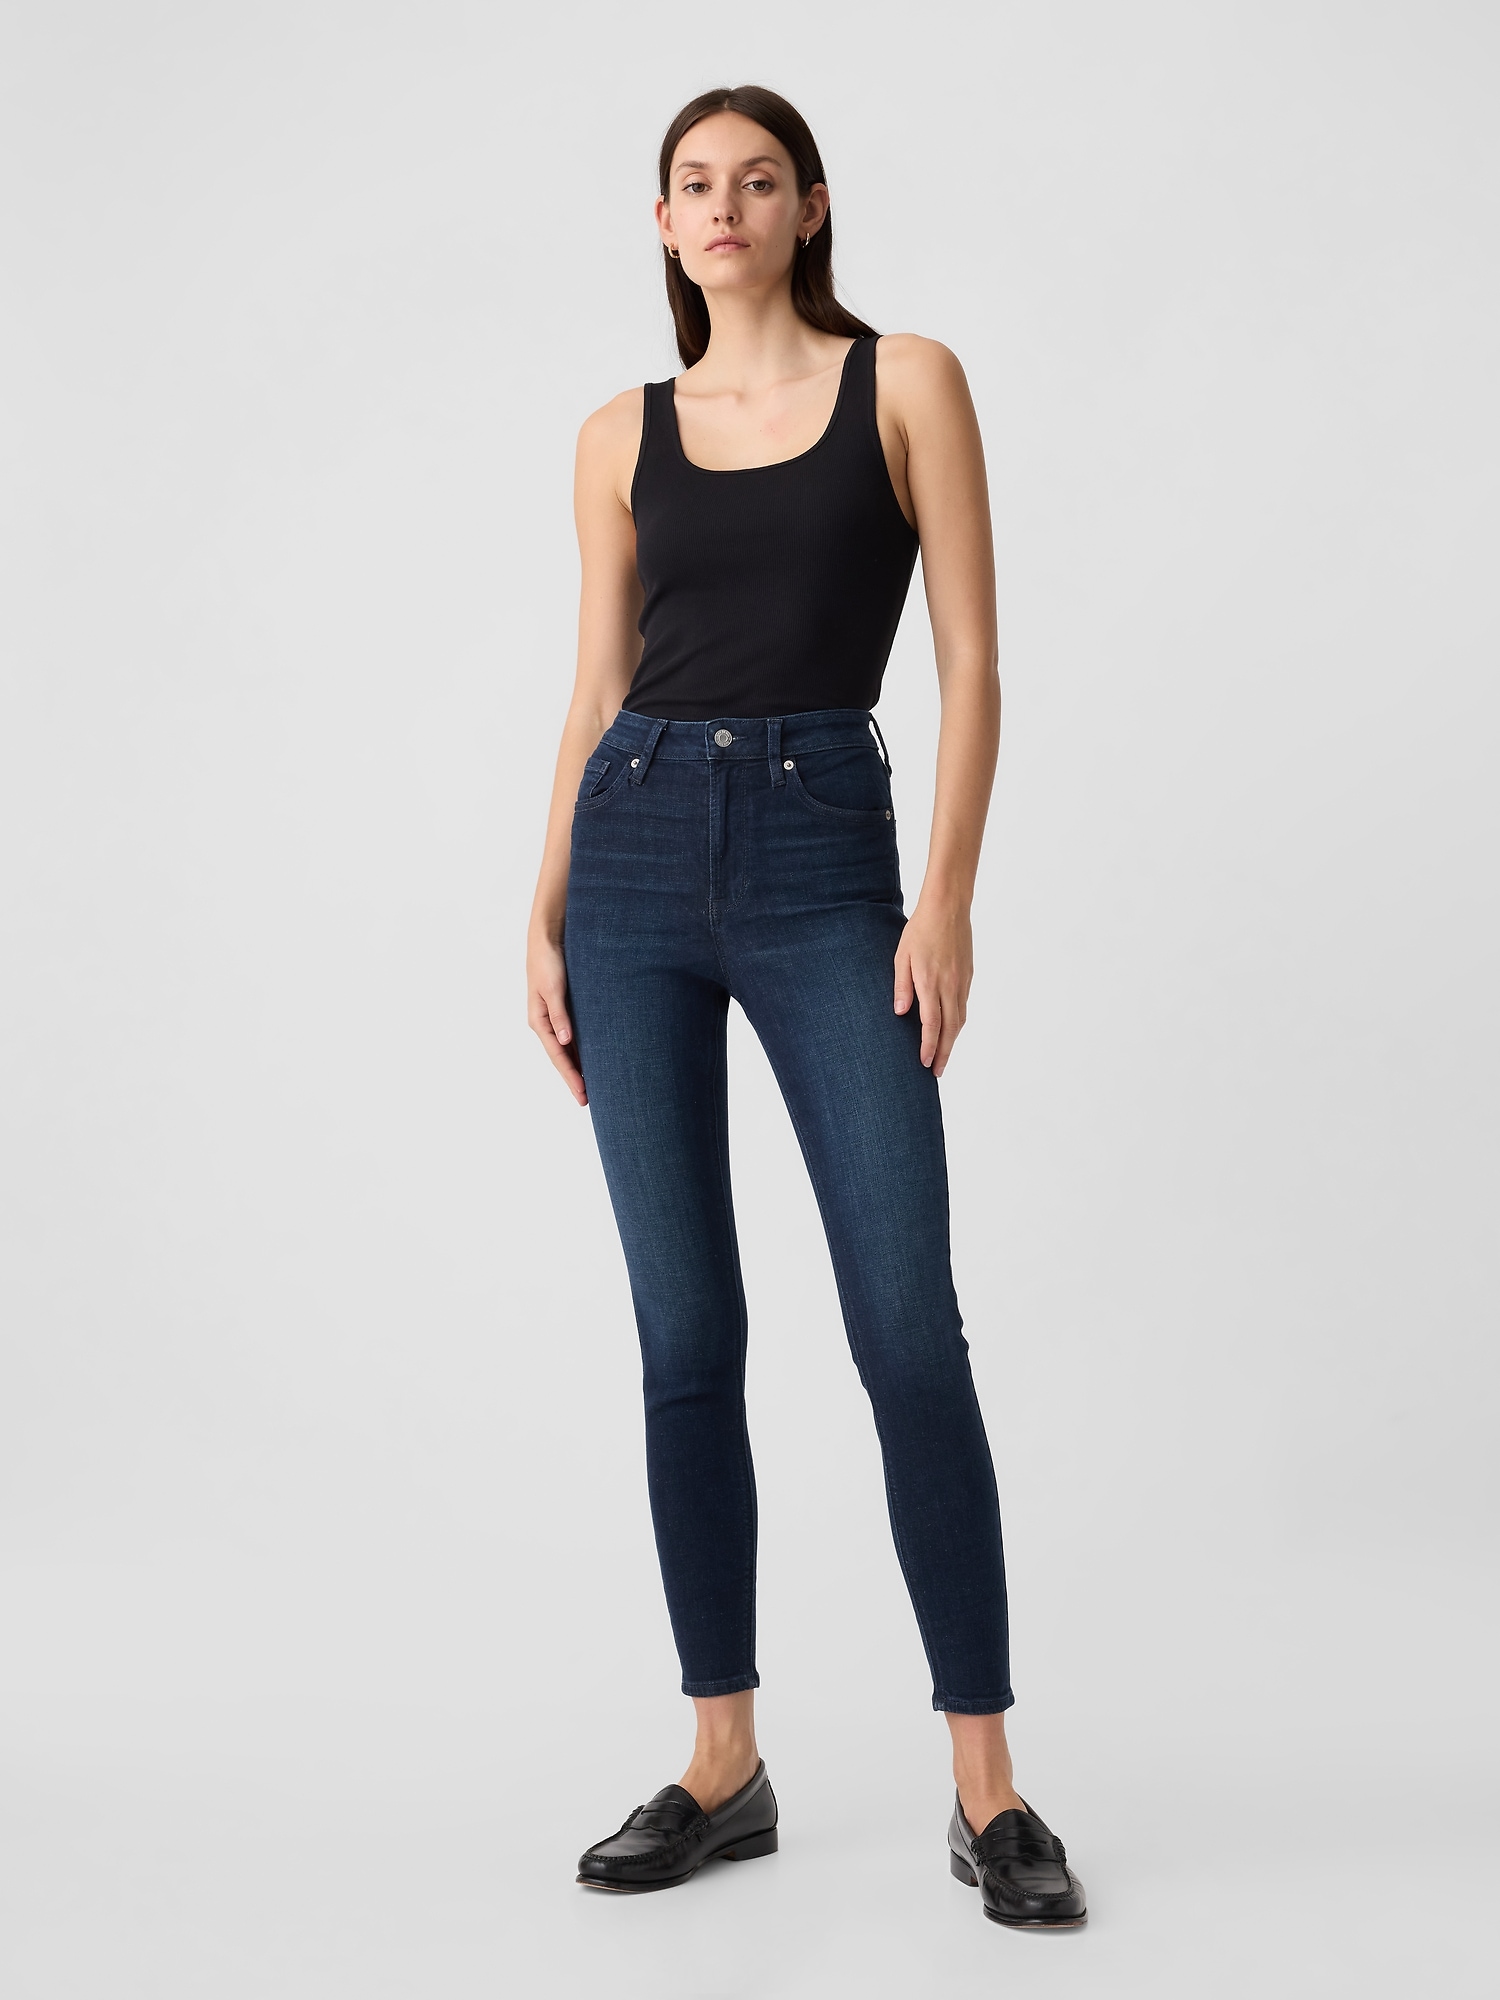 Gap Women's Legging Black Fade Stretch Jeans Distressed Size 14